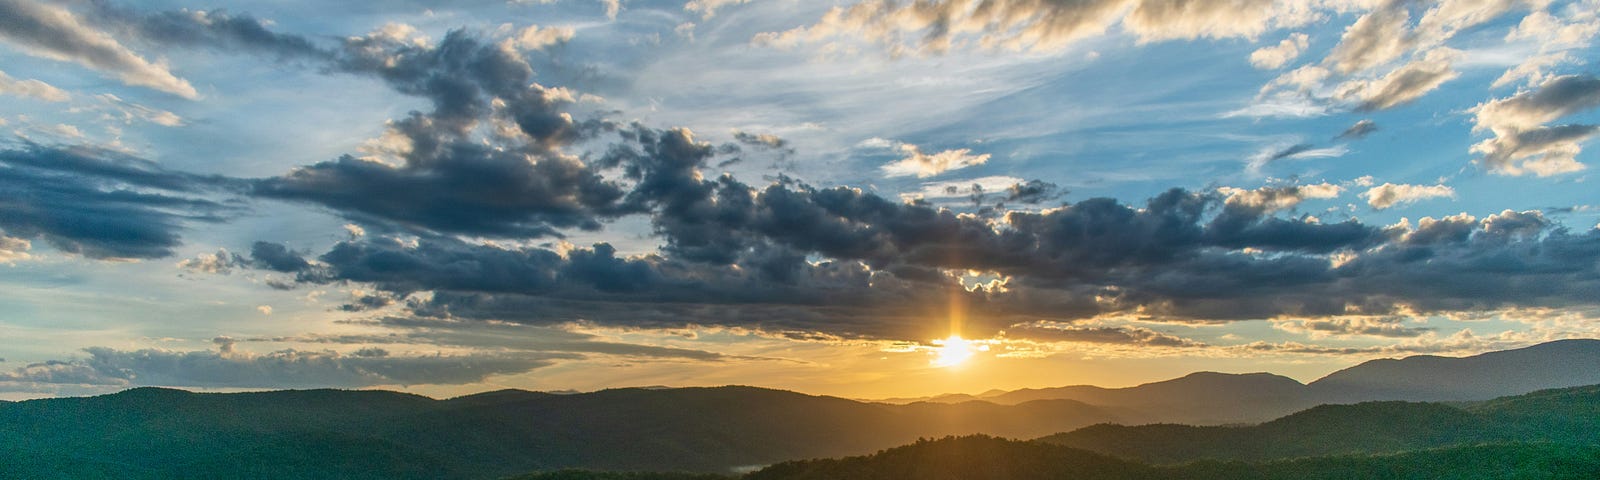 Sunrise over the Appalachian Mountains in North Carolina.